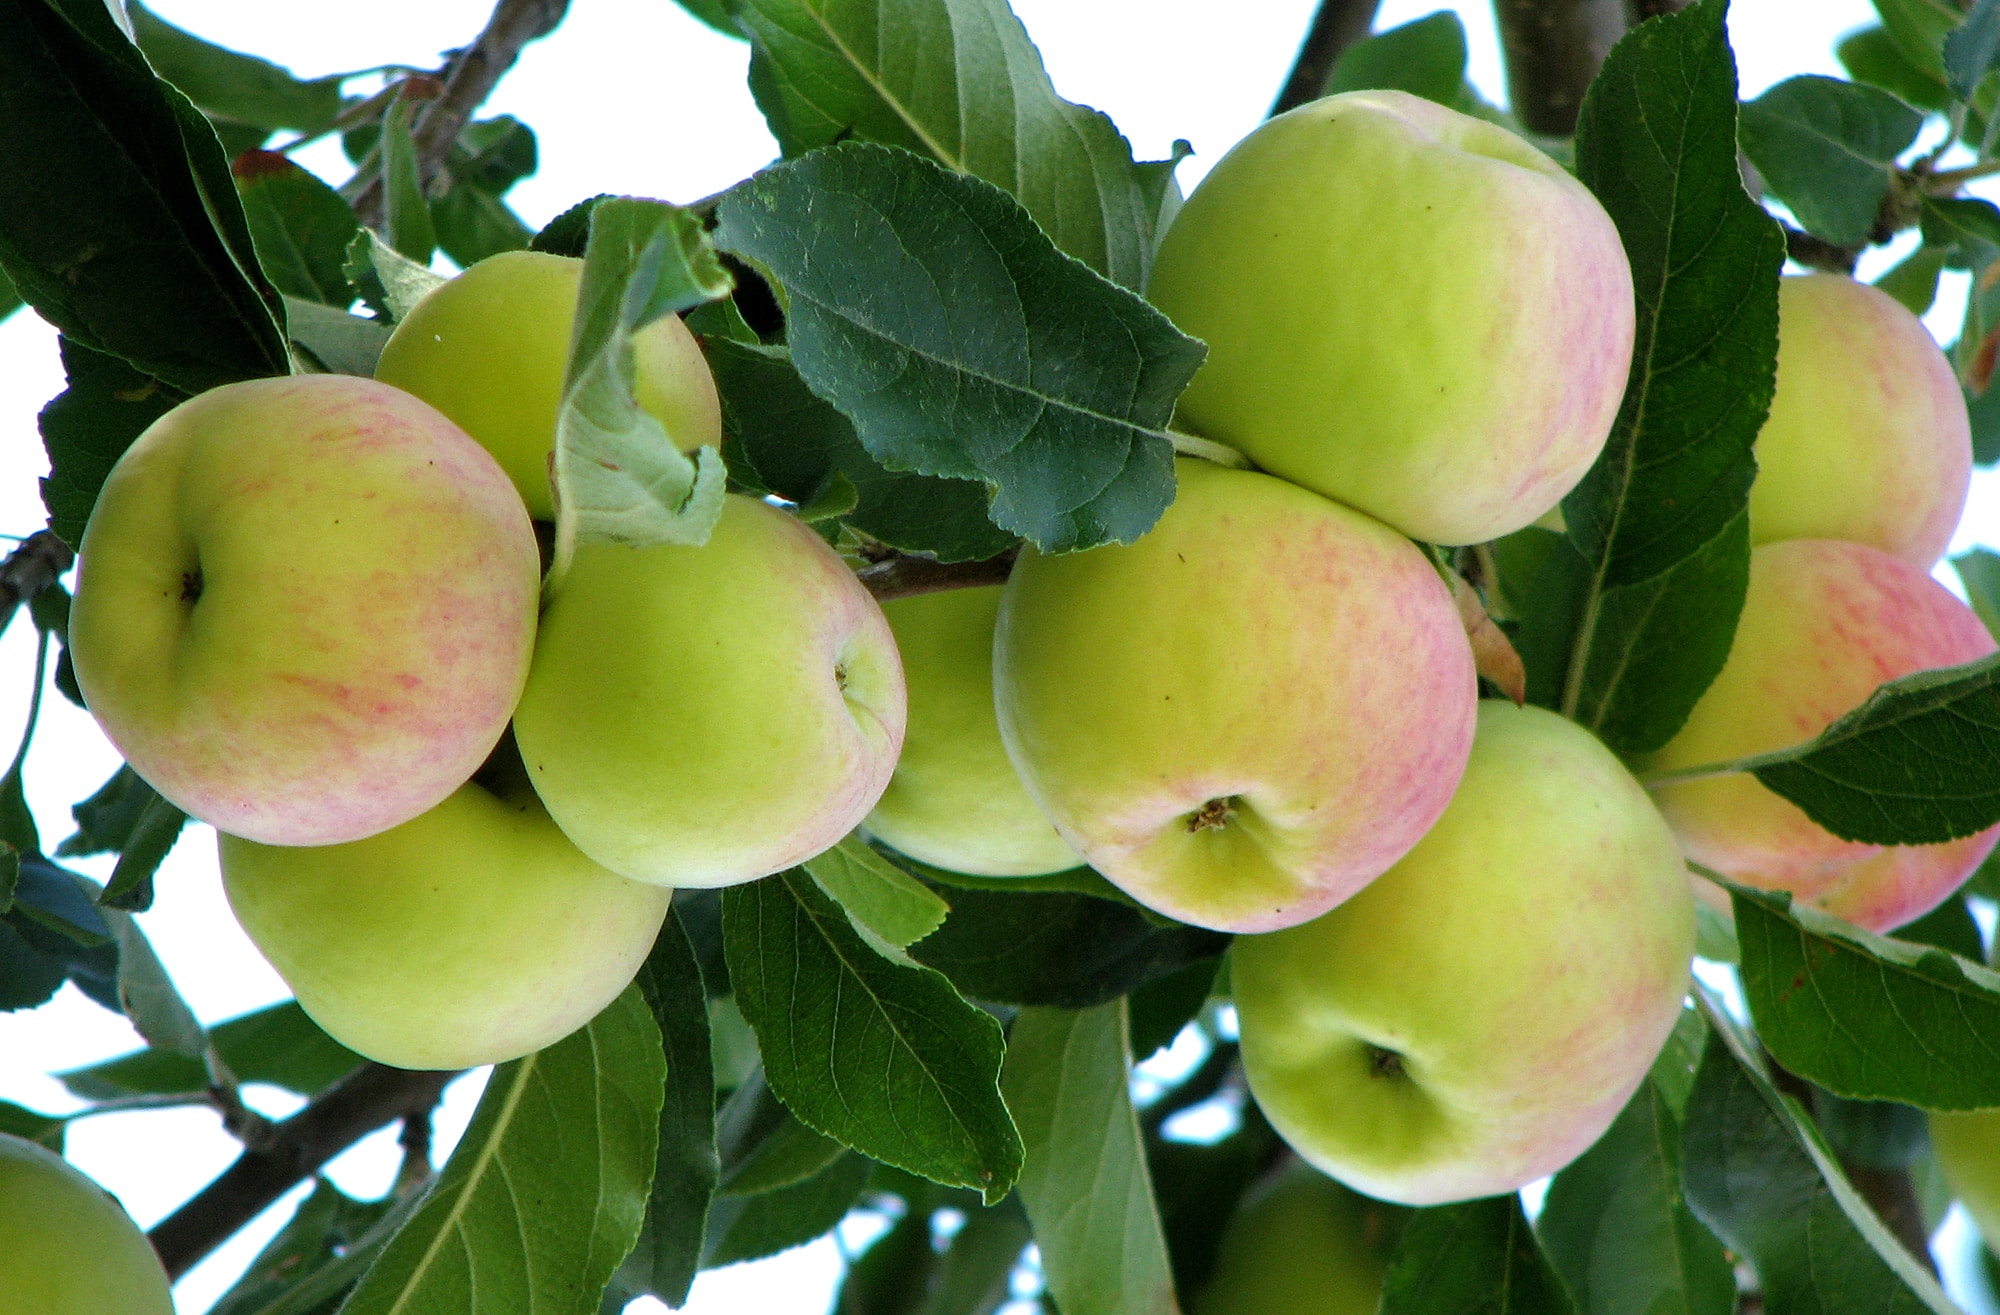 Apple cultivation in Kenya